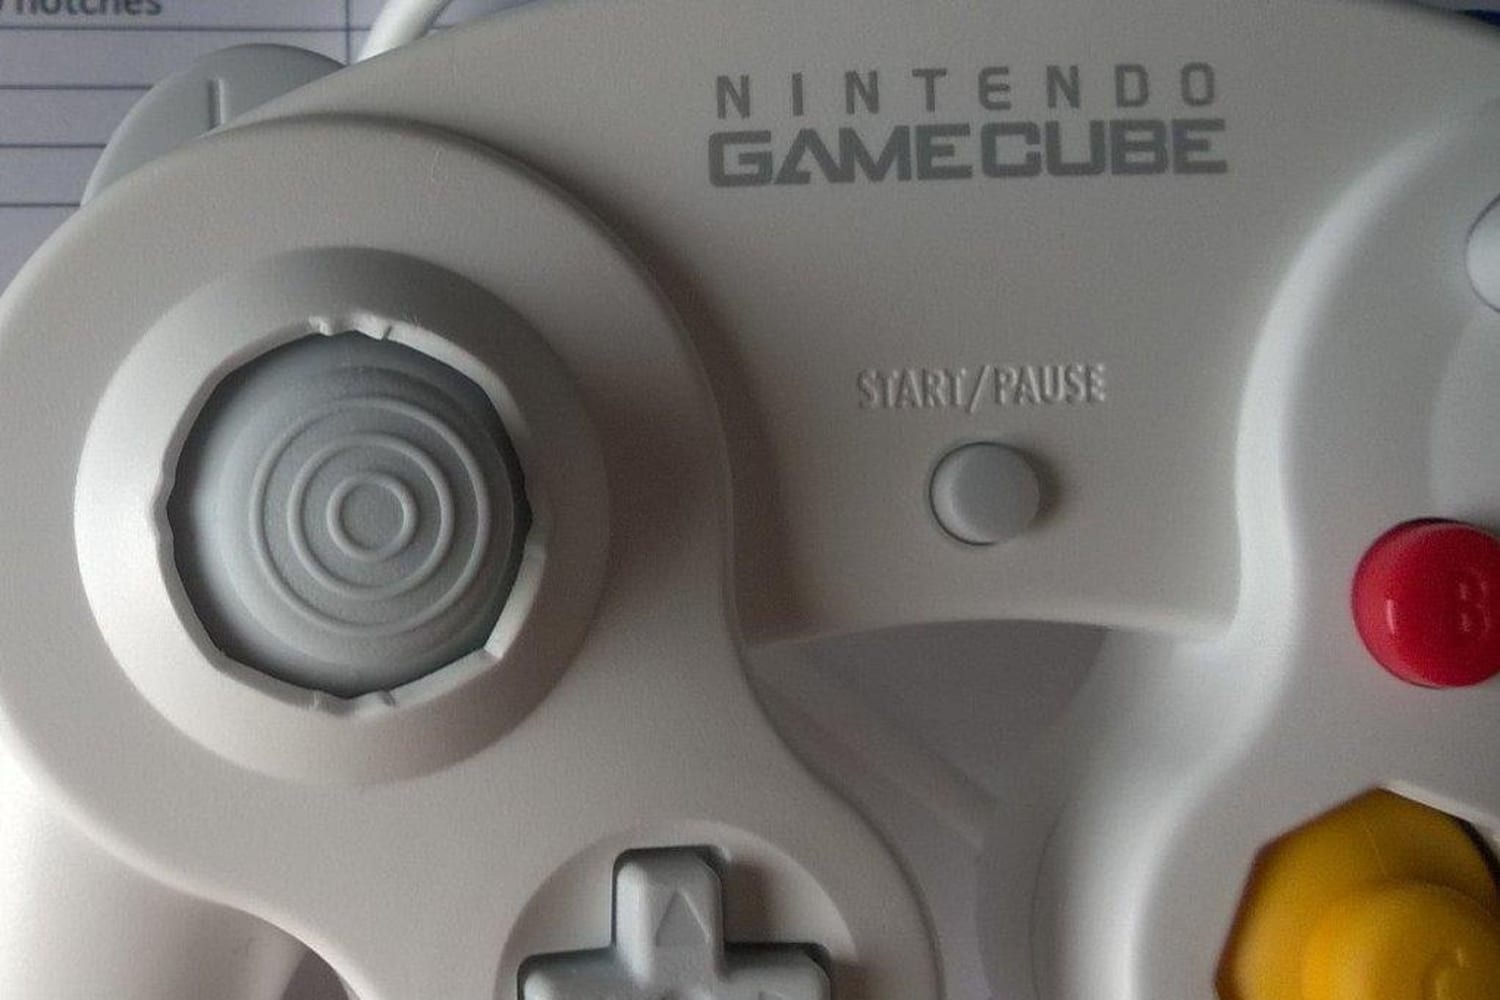 modded gamecube controller